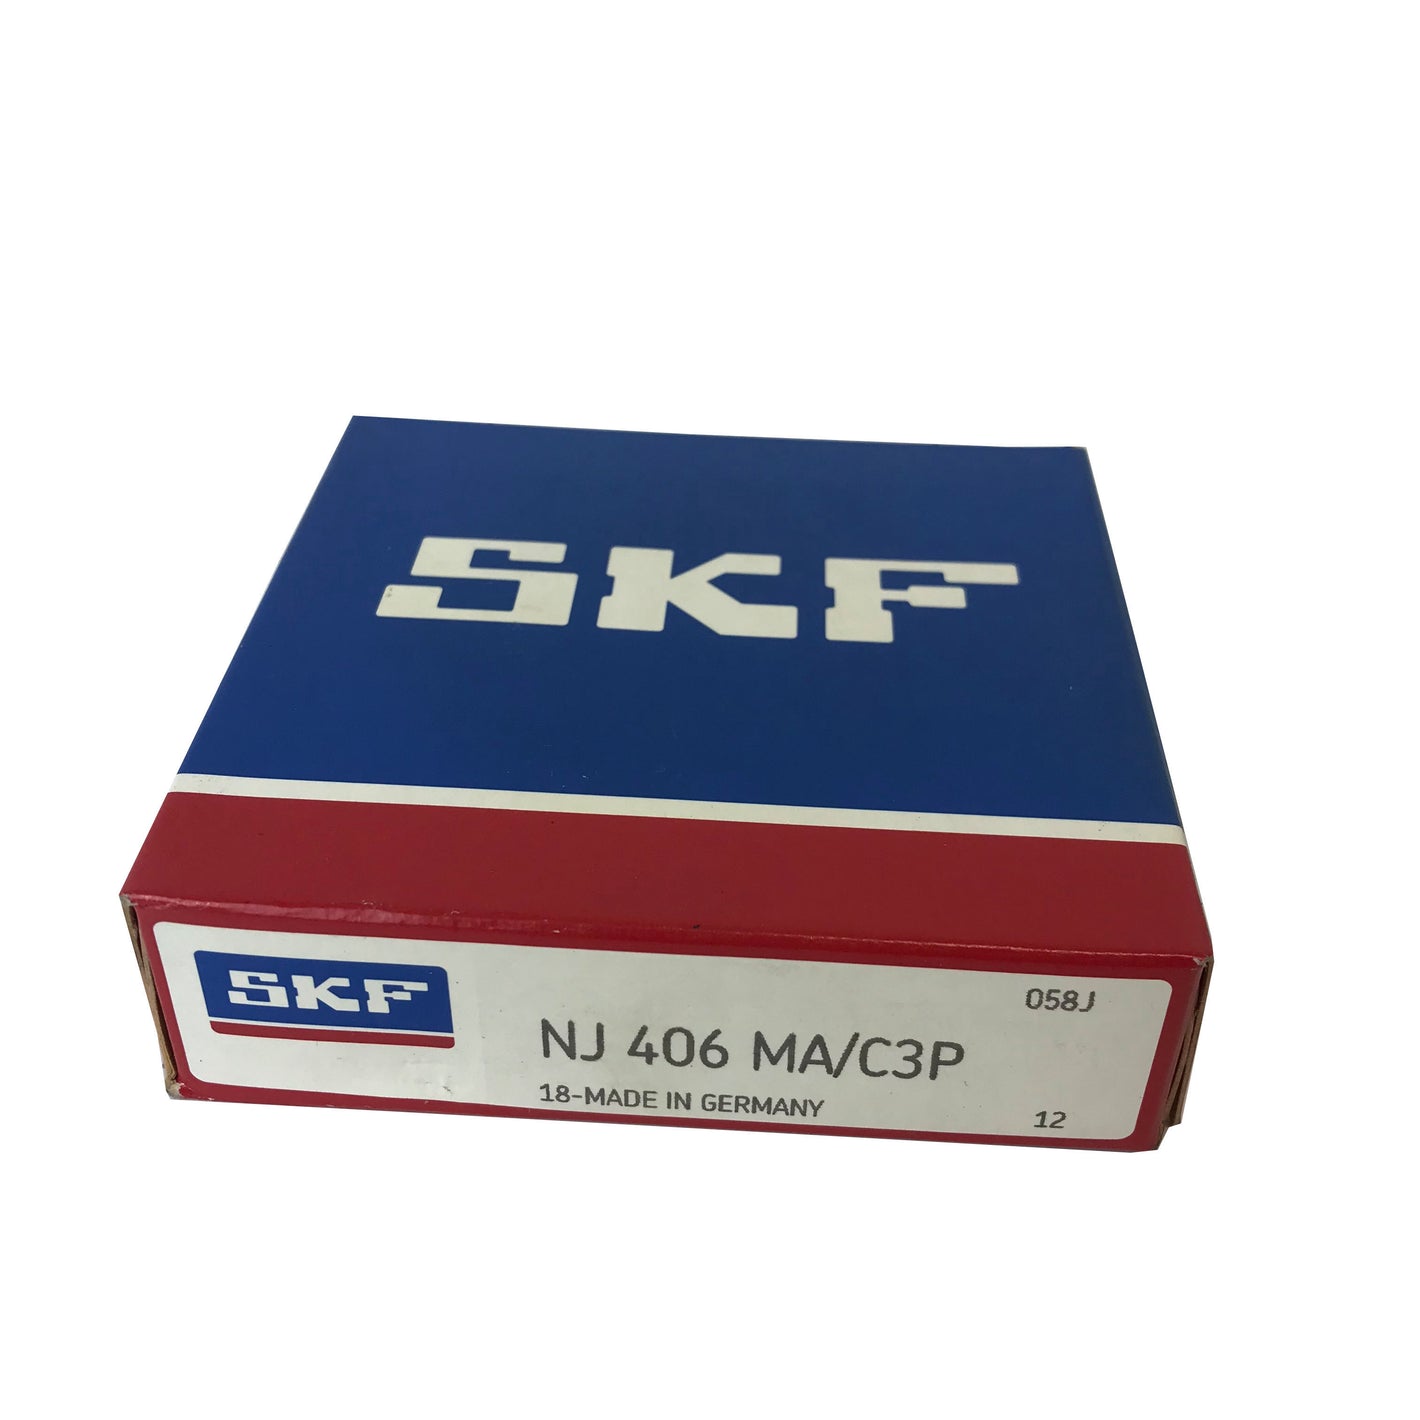 SKF NJ 406 MA/C3P 30x90x23mm Zylinderrollenlager